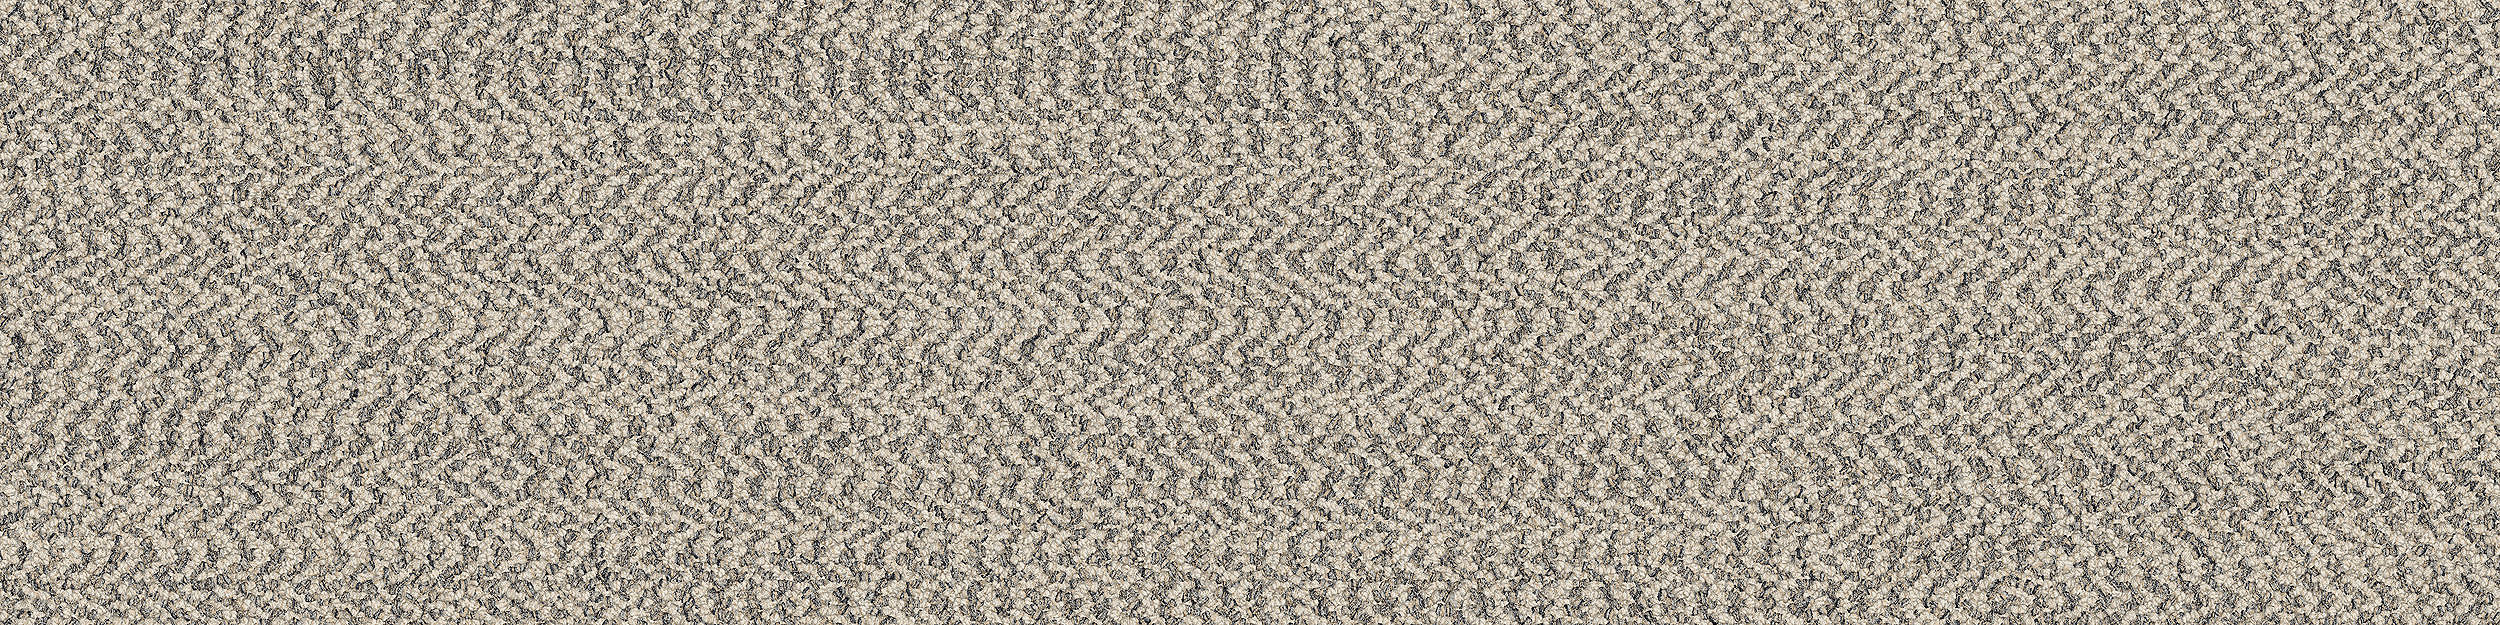 Third Space 307 Carpet Tile in Shell imagen número 3